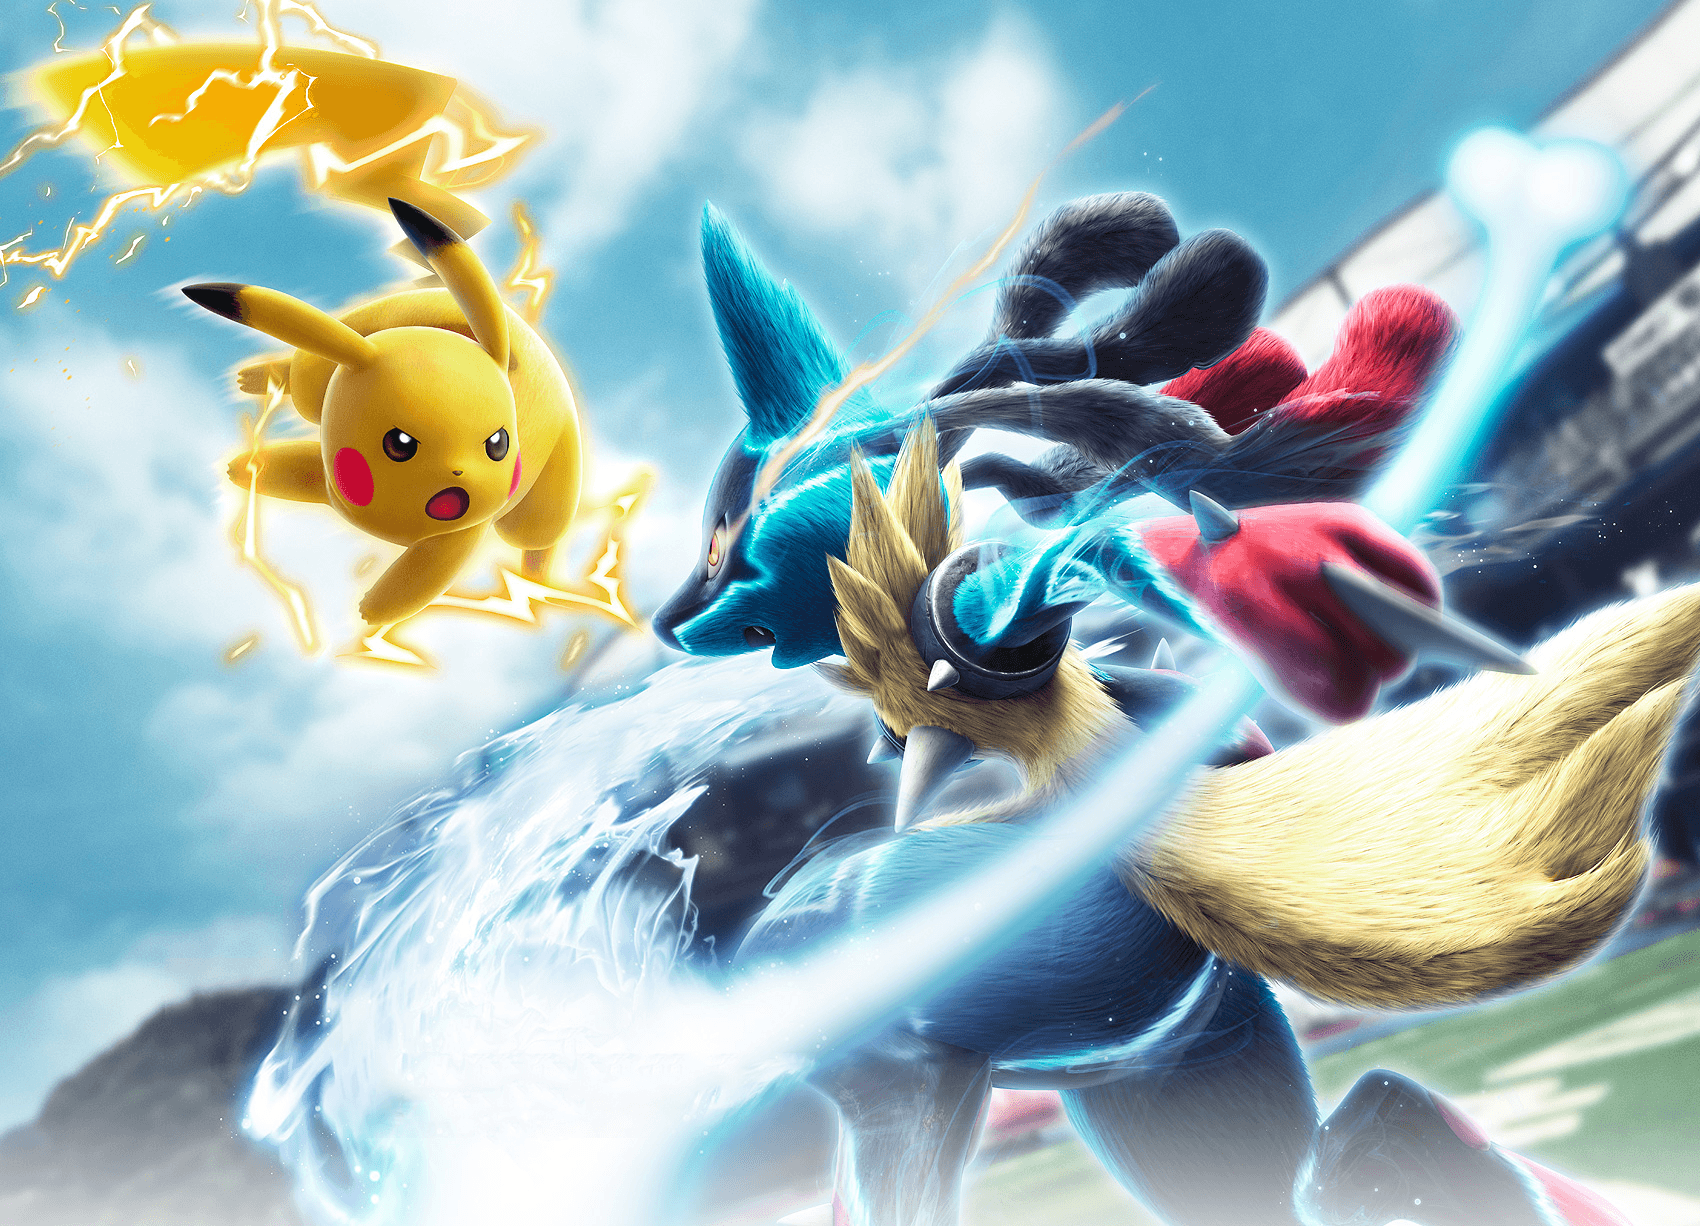 Mega Lucario (Pokémon) HD Wallpaper and Background Image